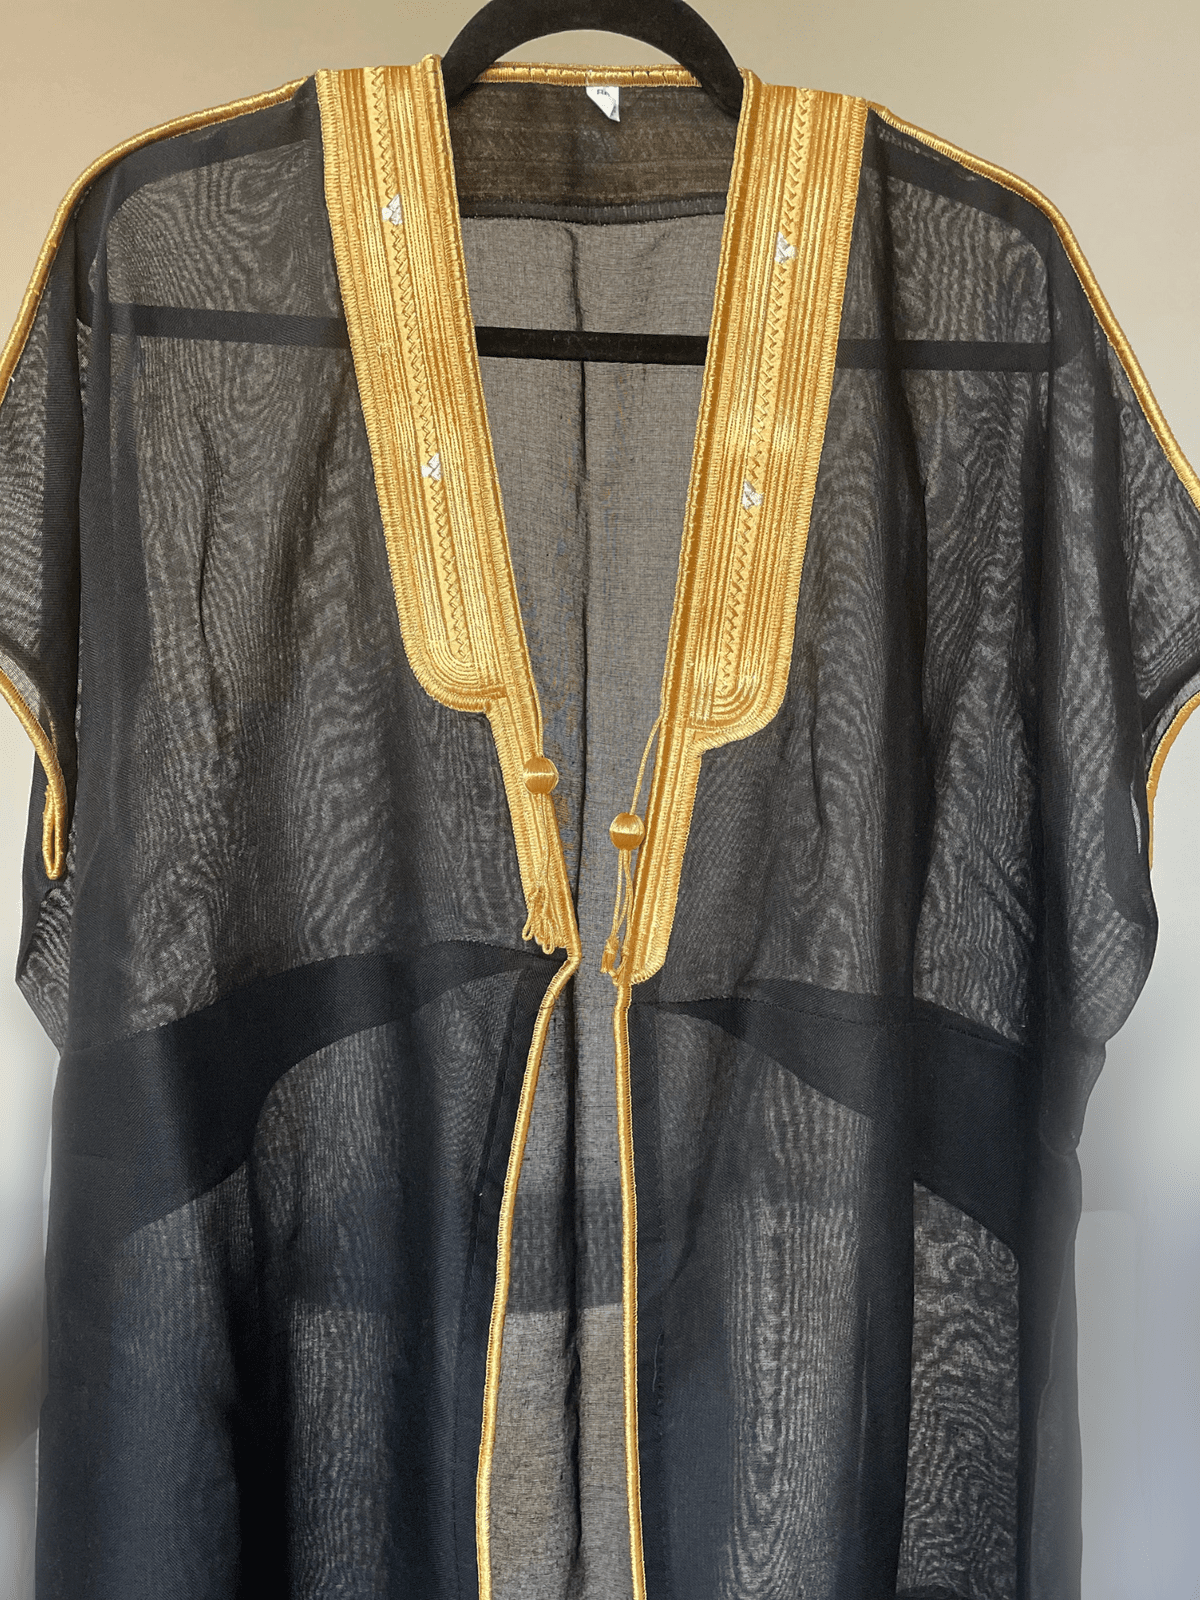 black-bisht -bisht-cloak-arab-clothing